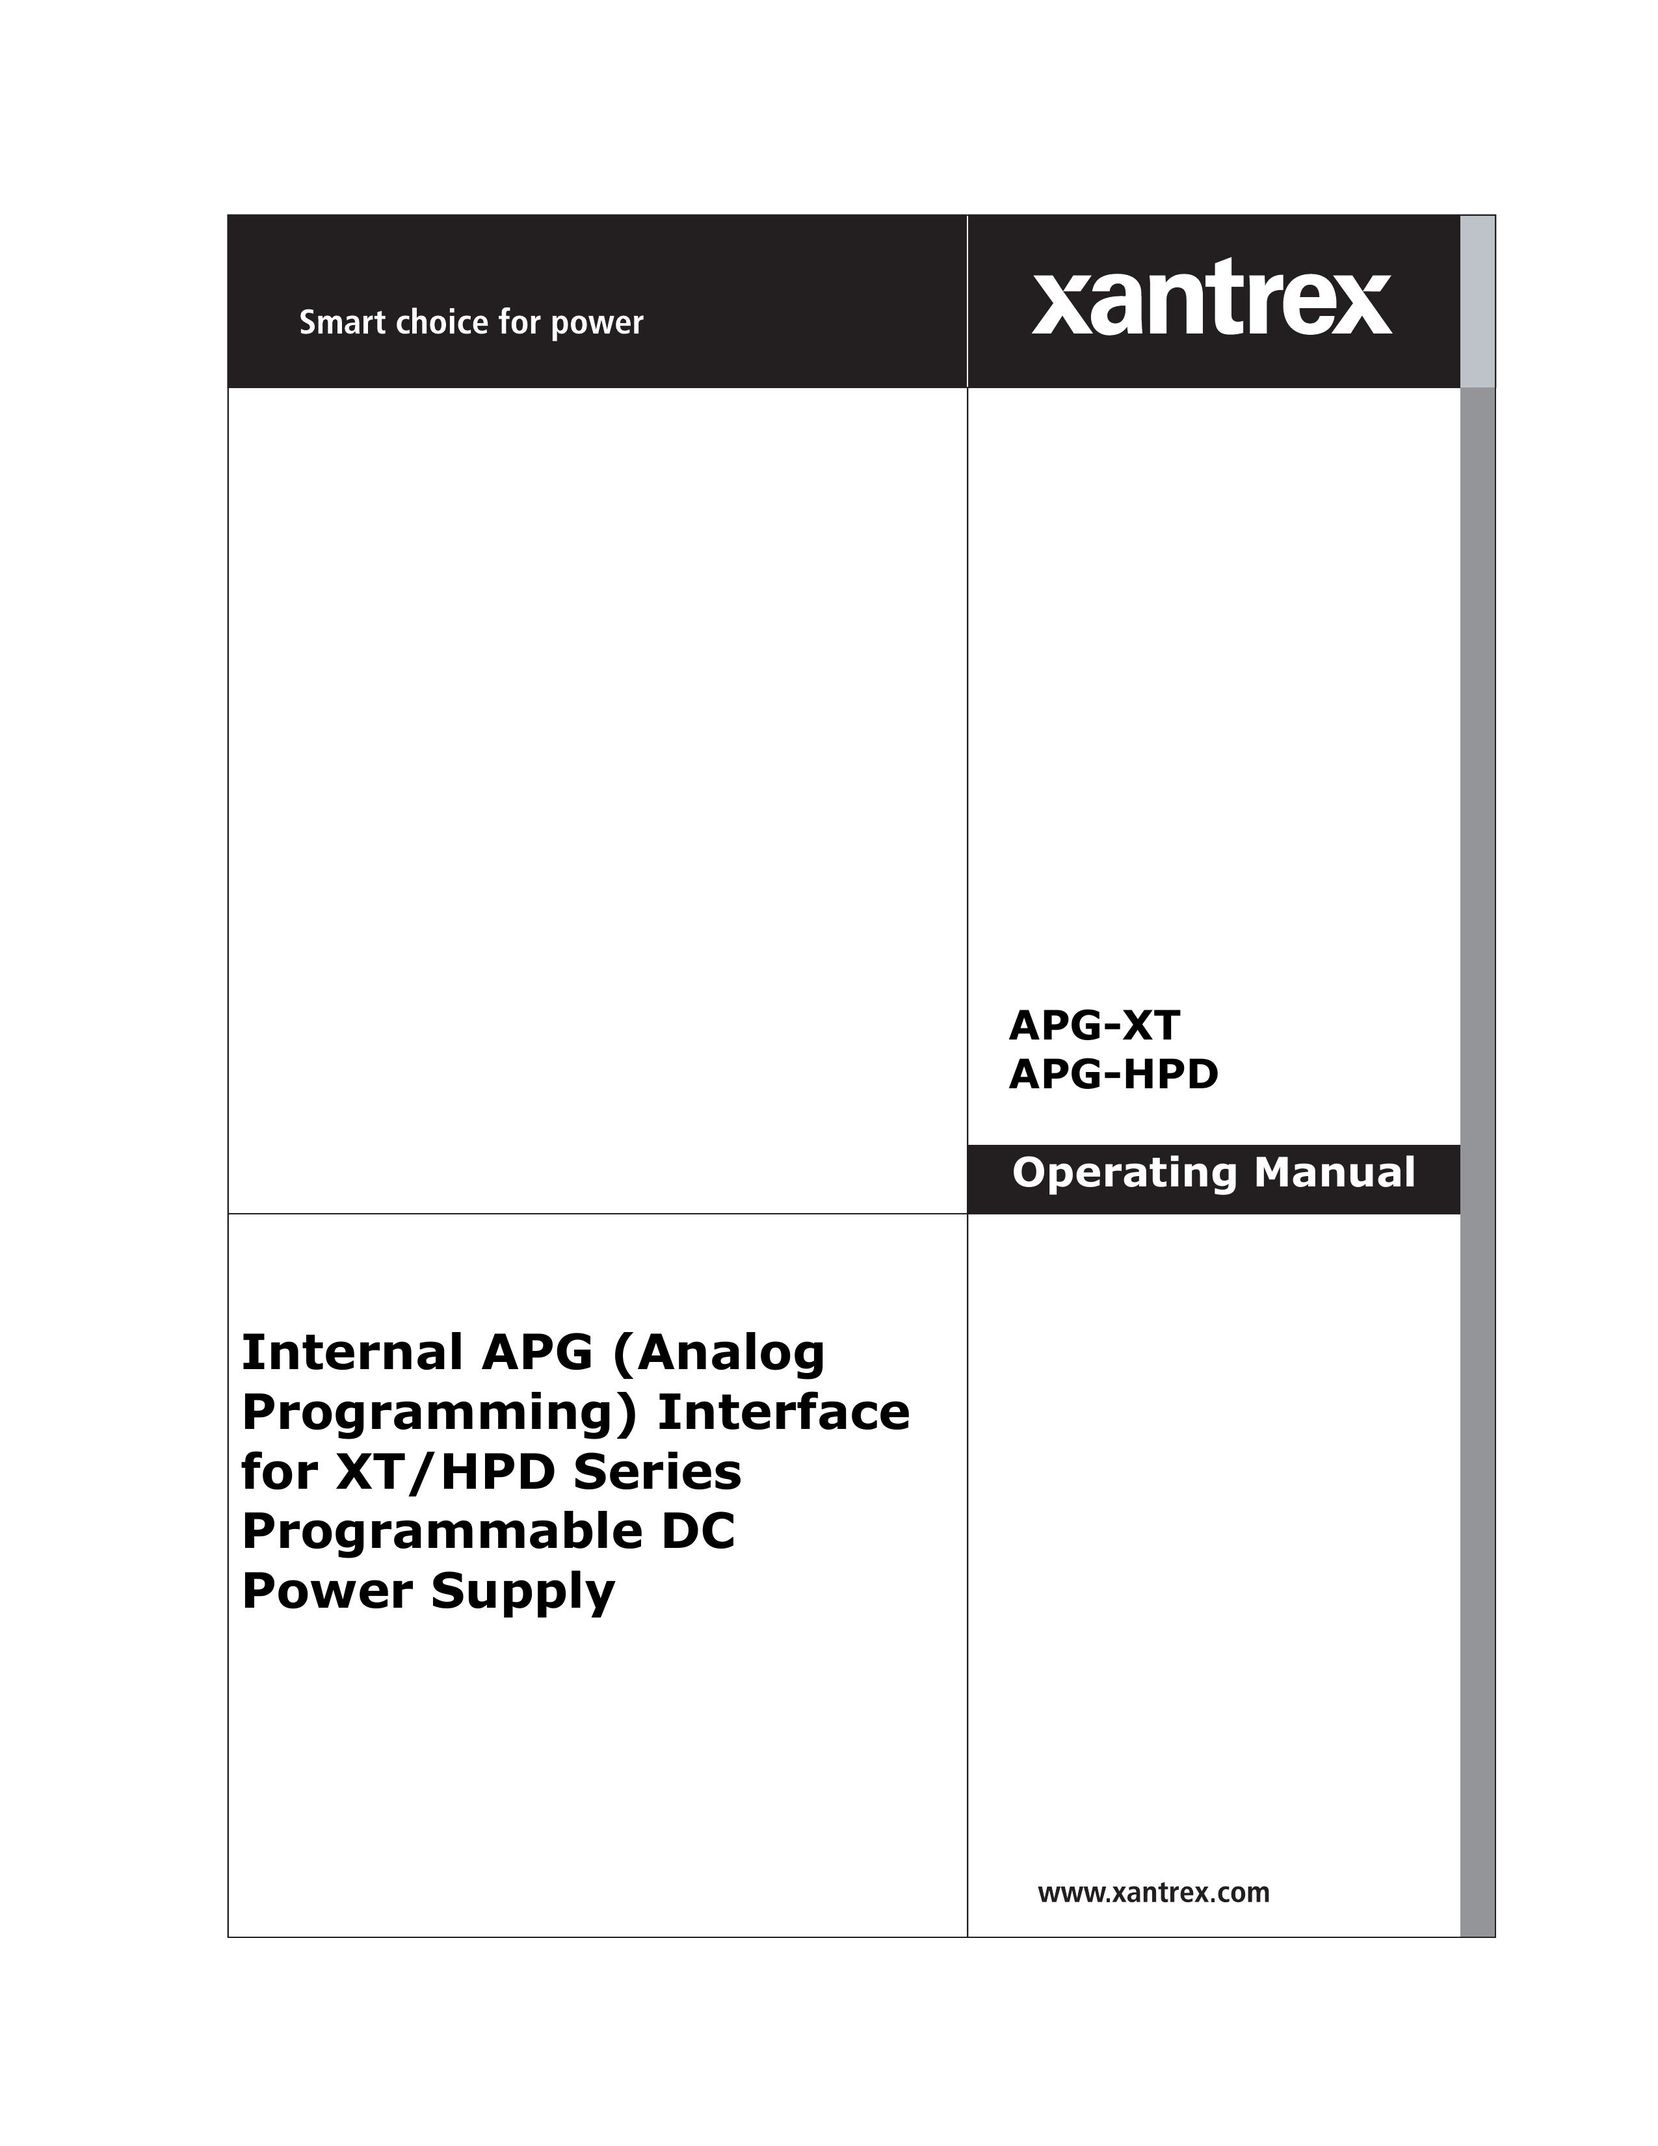 Xantrex Technology APG-HPD Power Supply User Manual